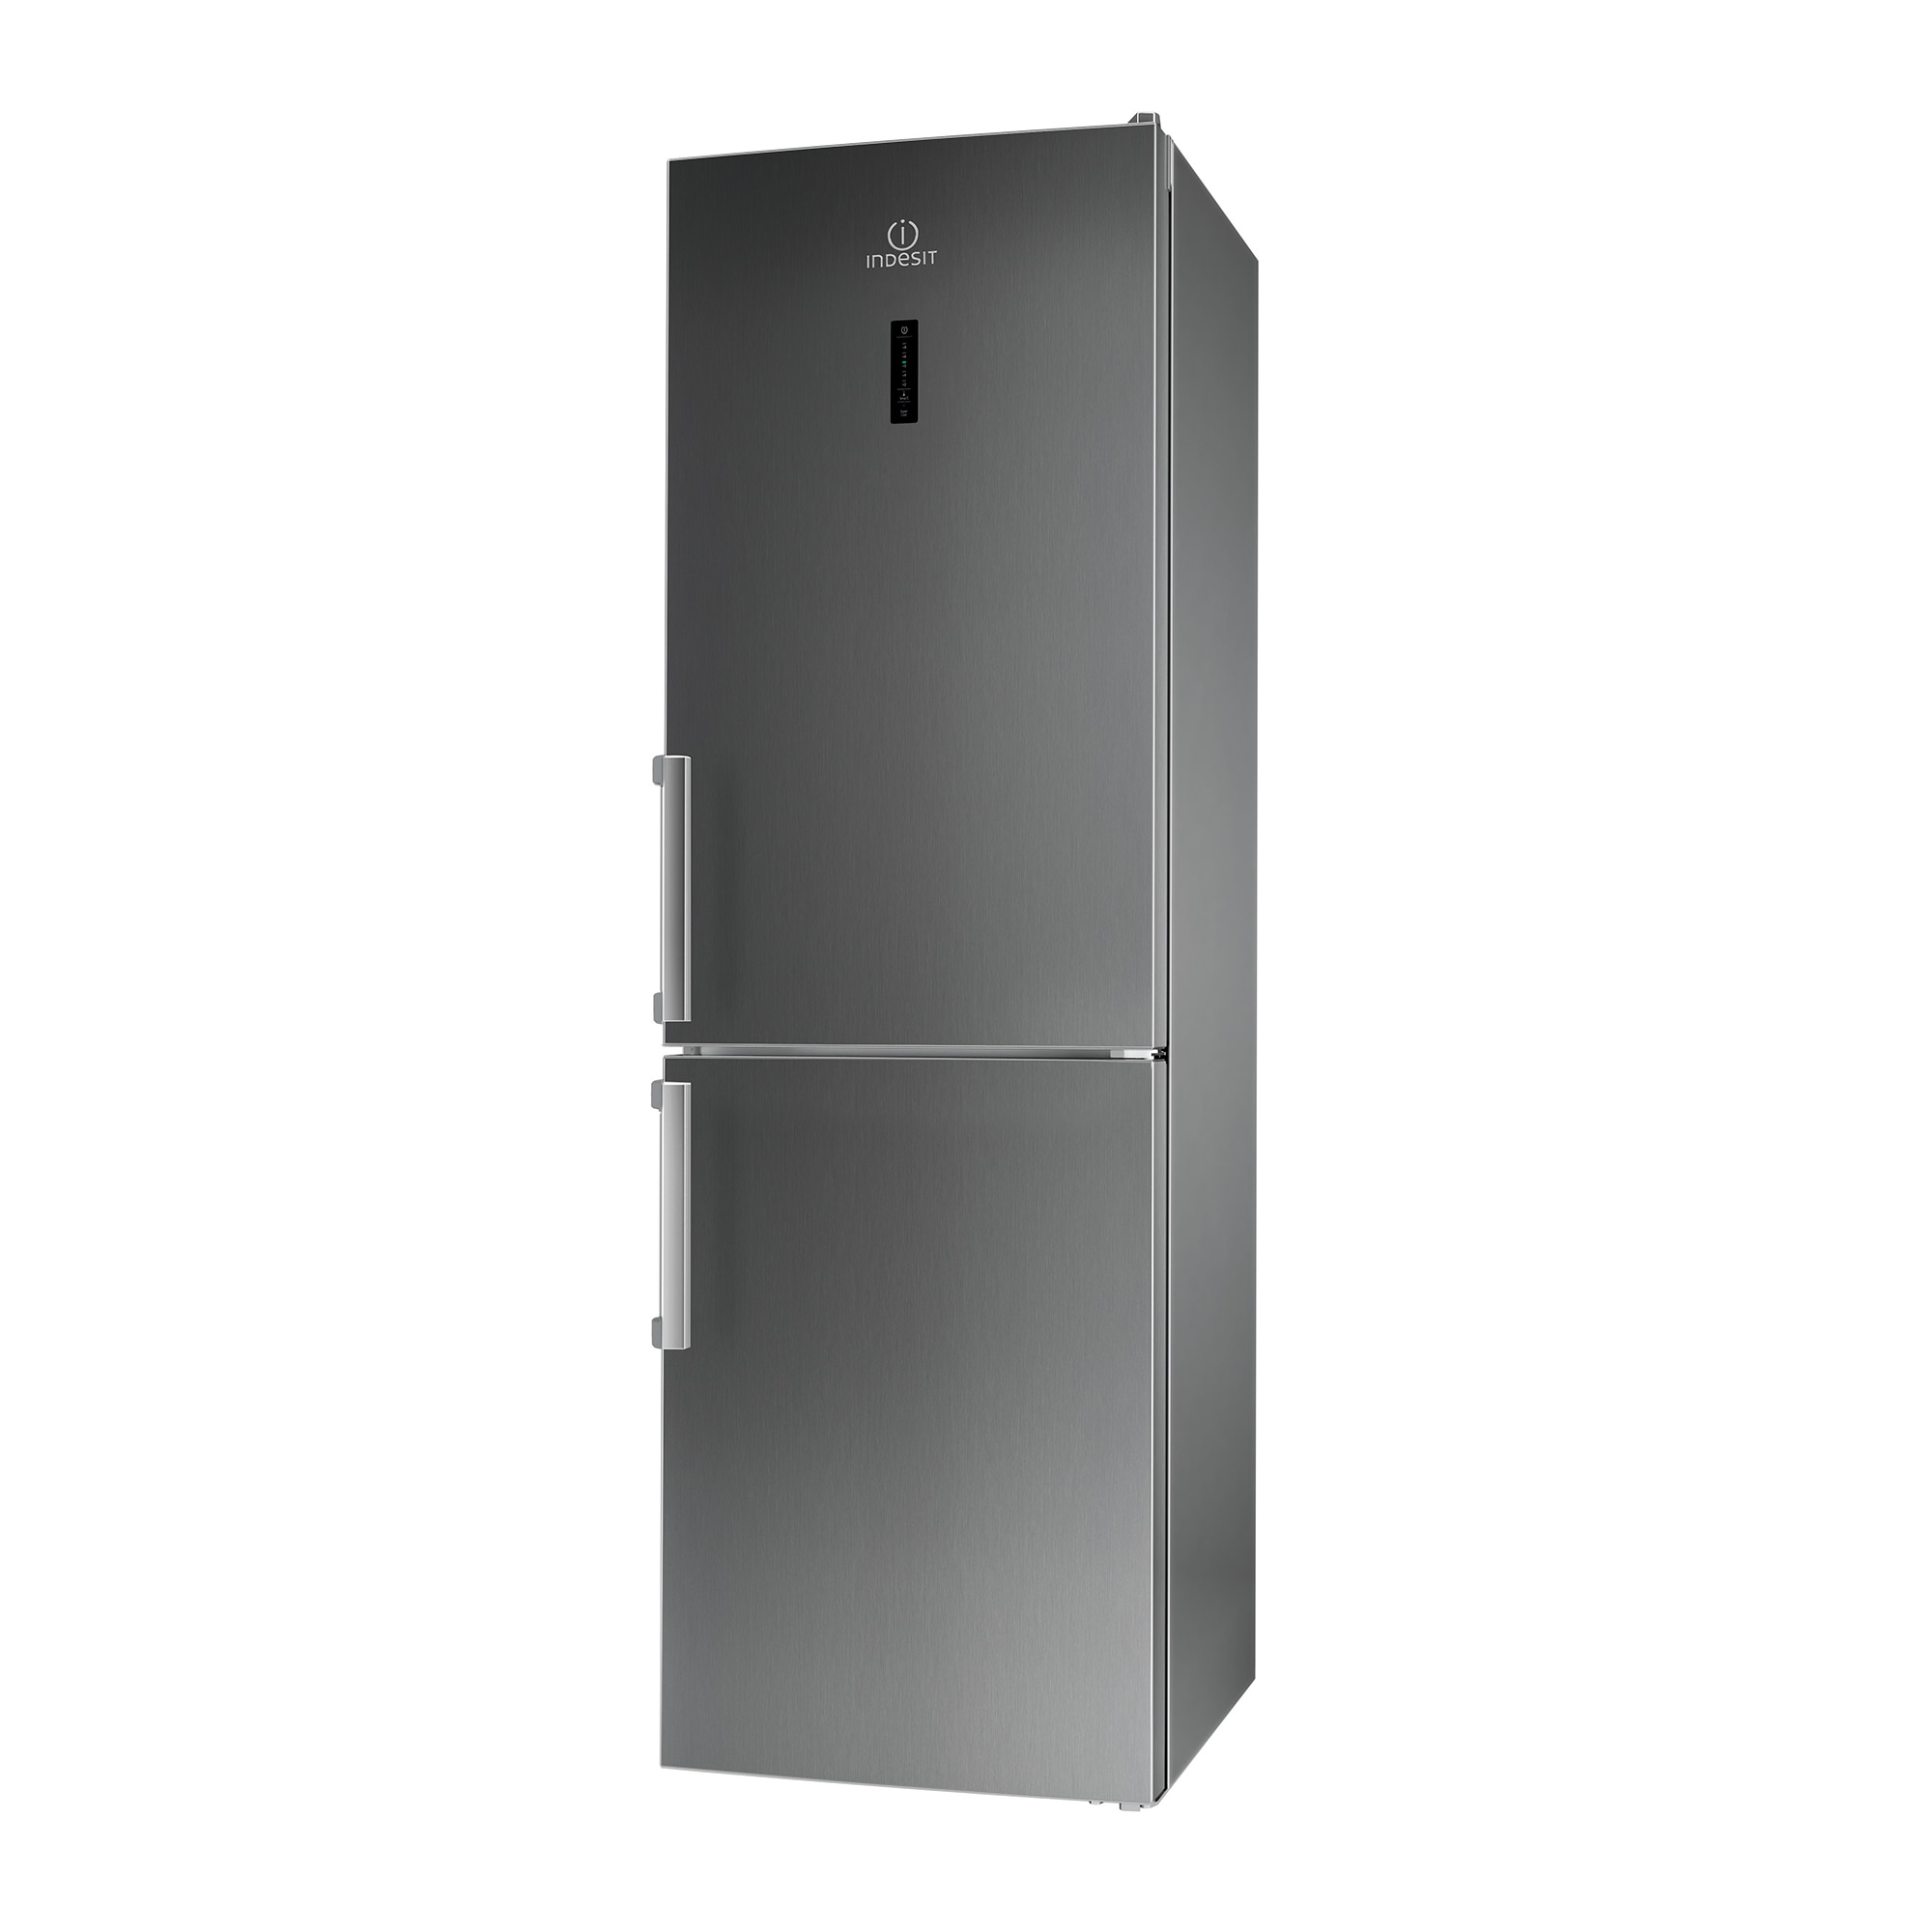 Хладилник Indesit XI9 T2Y X B H с обем от 369 л.